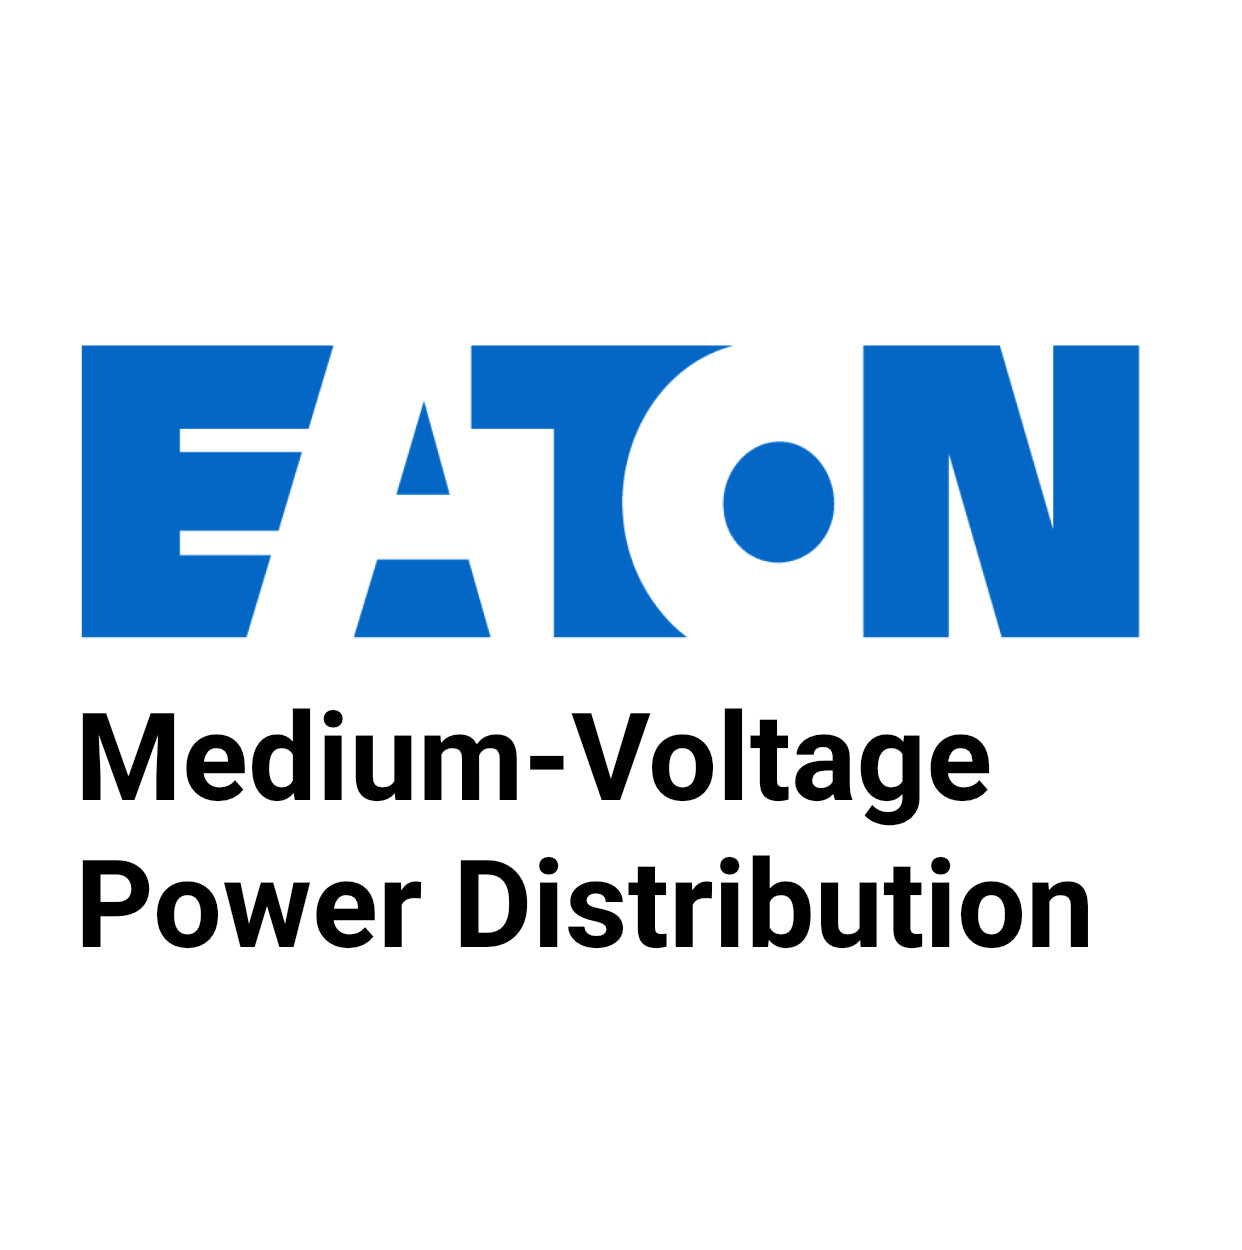 EATON MEDIUM-VOLTAGE POWER DISTRIBUTION